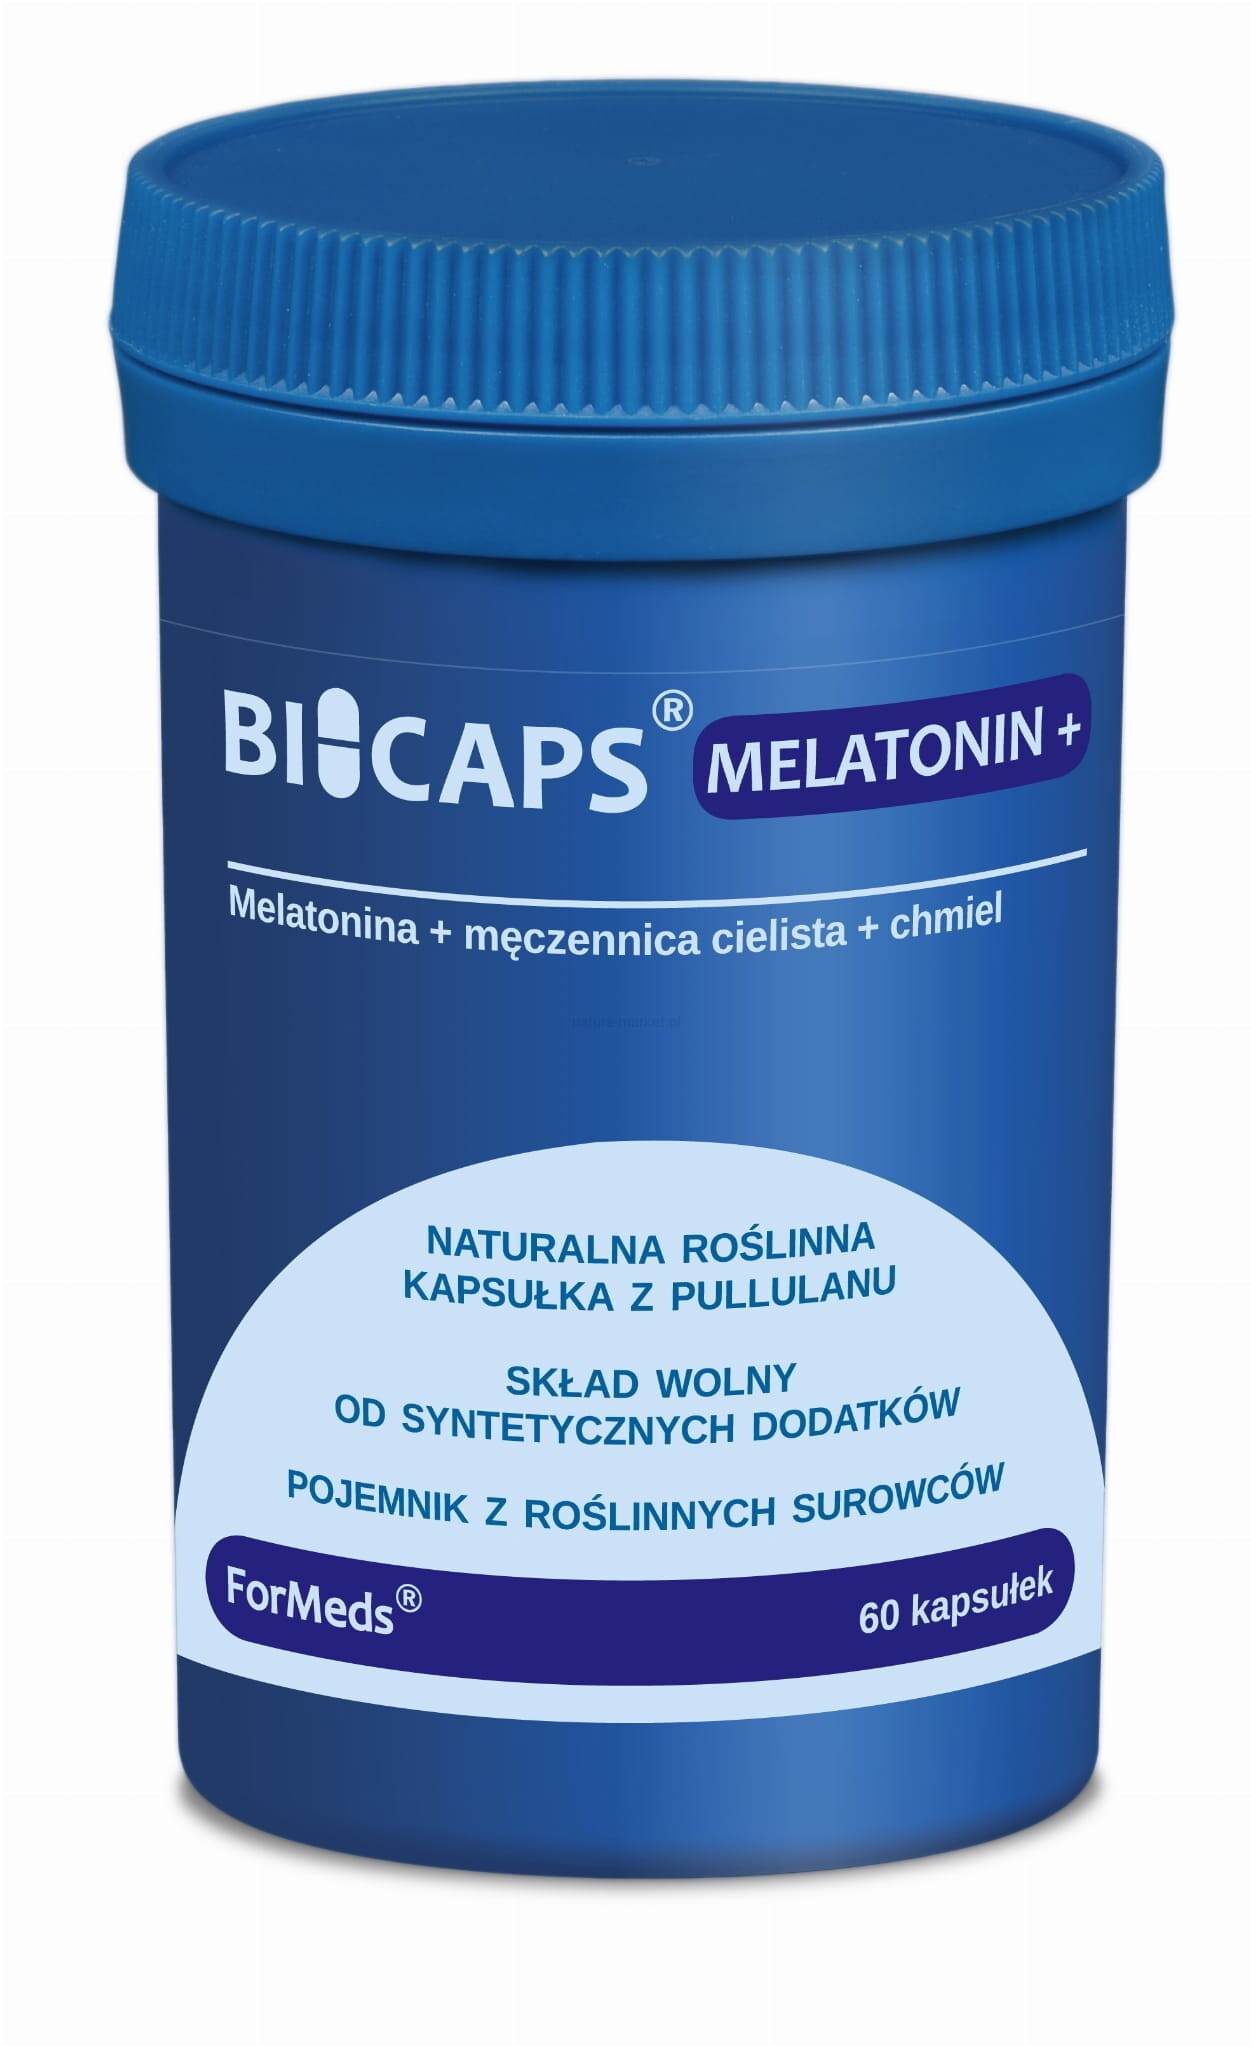 Bicaps Melatonin+, Melatonina, 60 kapsułek, ForMeds